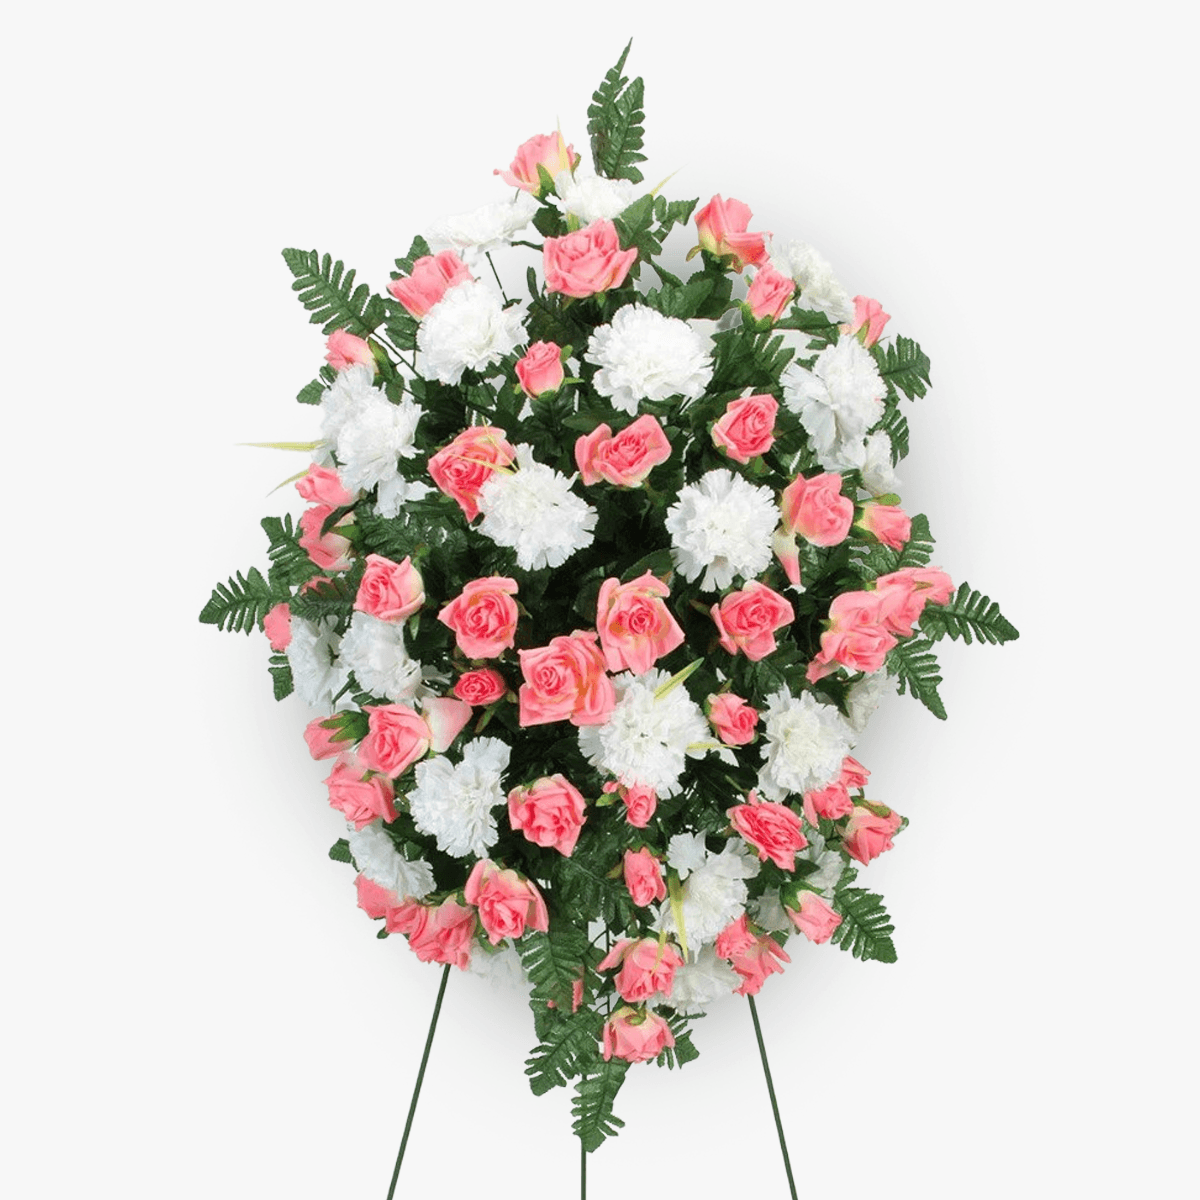 Coroana funerara cu 35 trandafiri roz, 15 garoafe albe